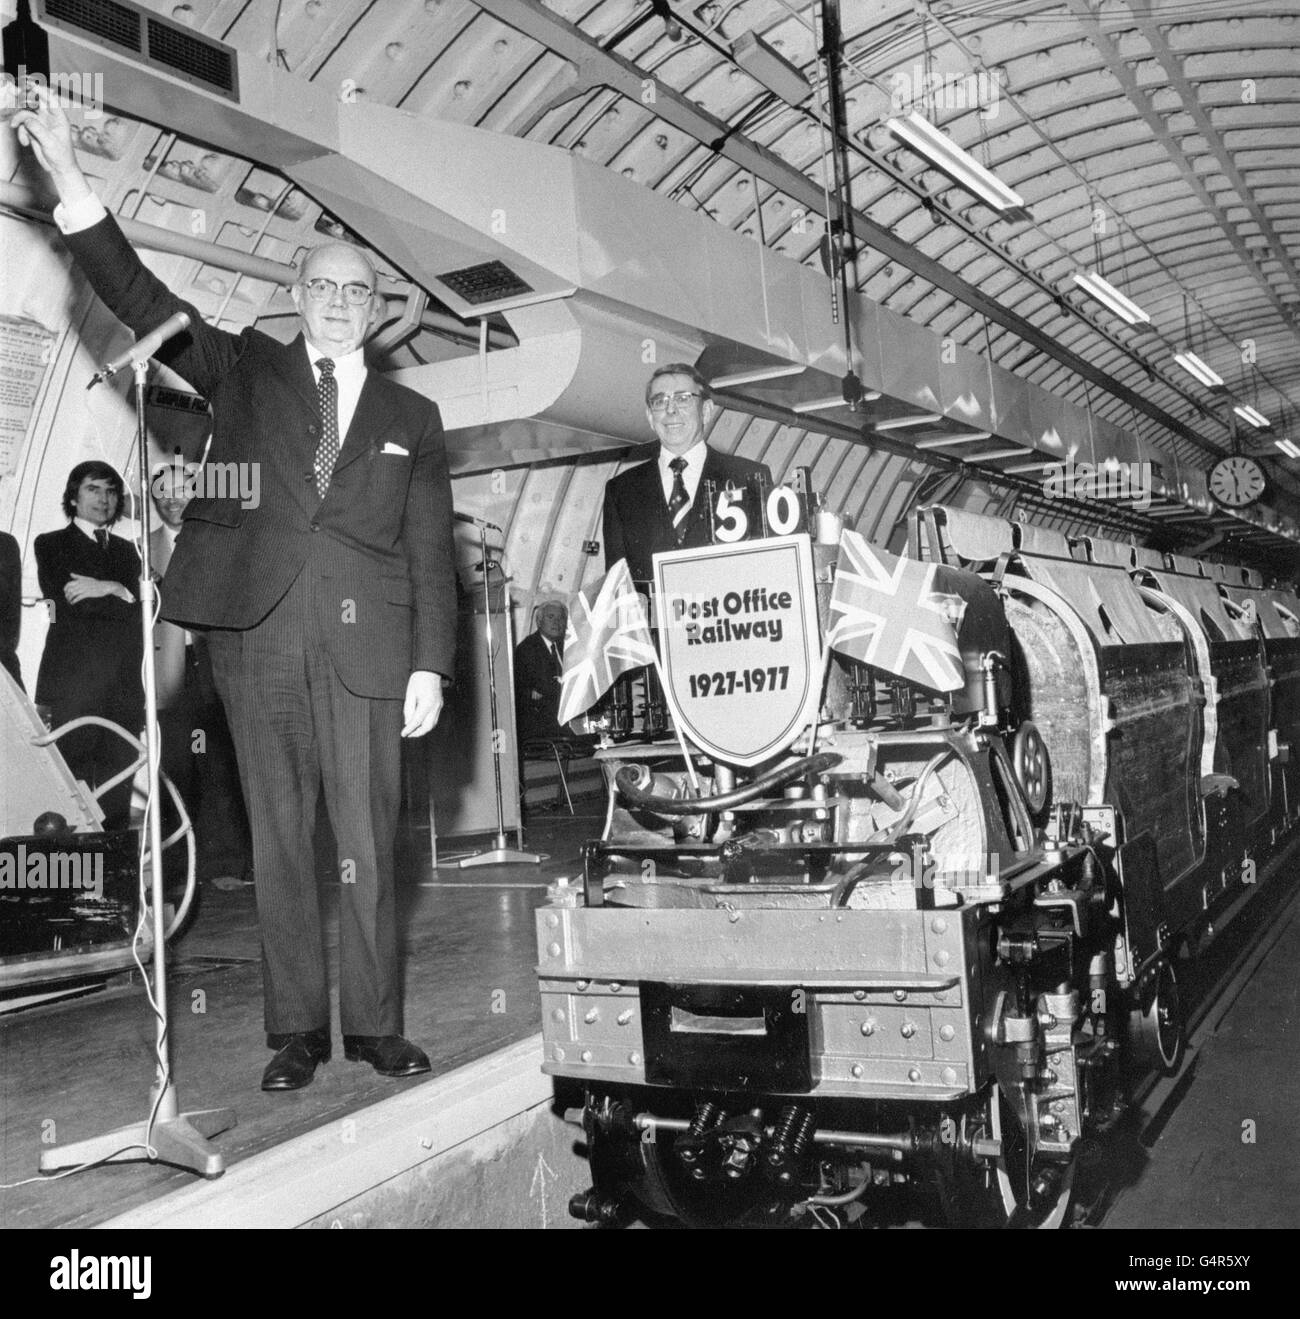 Underground postal railway Black and White Stock Photos & Images - Alamy